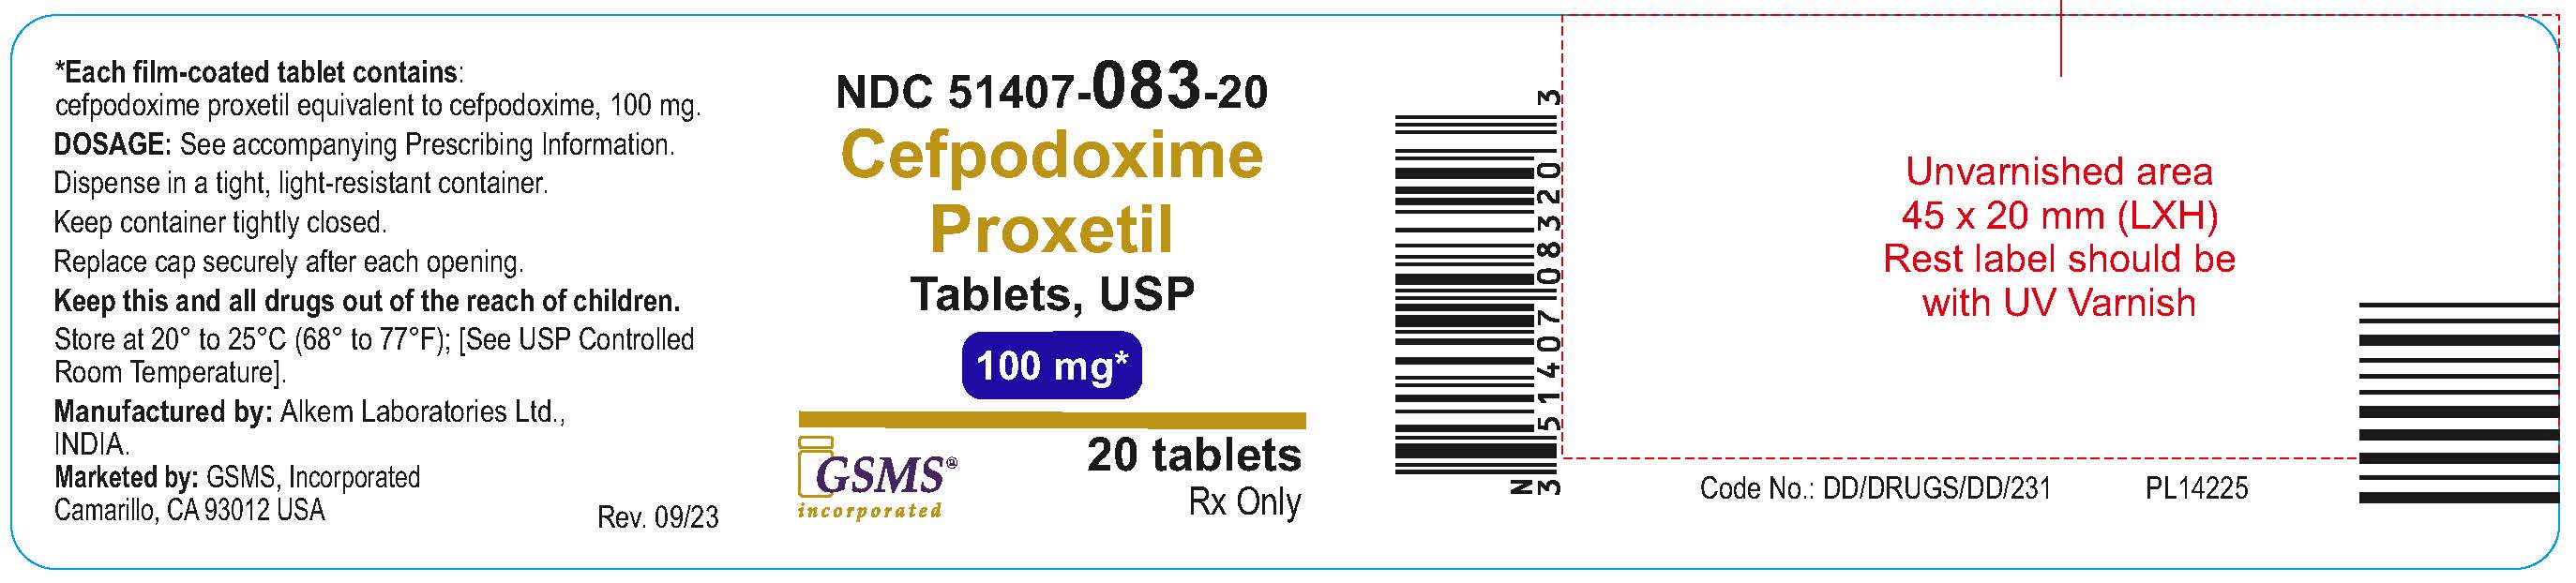 PL - 51407-083-20 - Cefpodoxime Proxetil Tabs USP 100 mg 20s.jpg